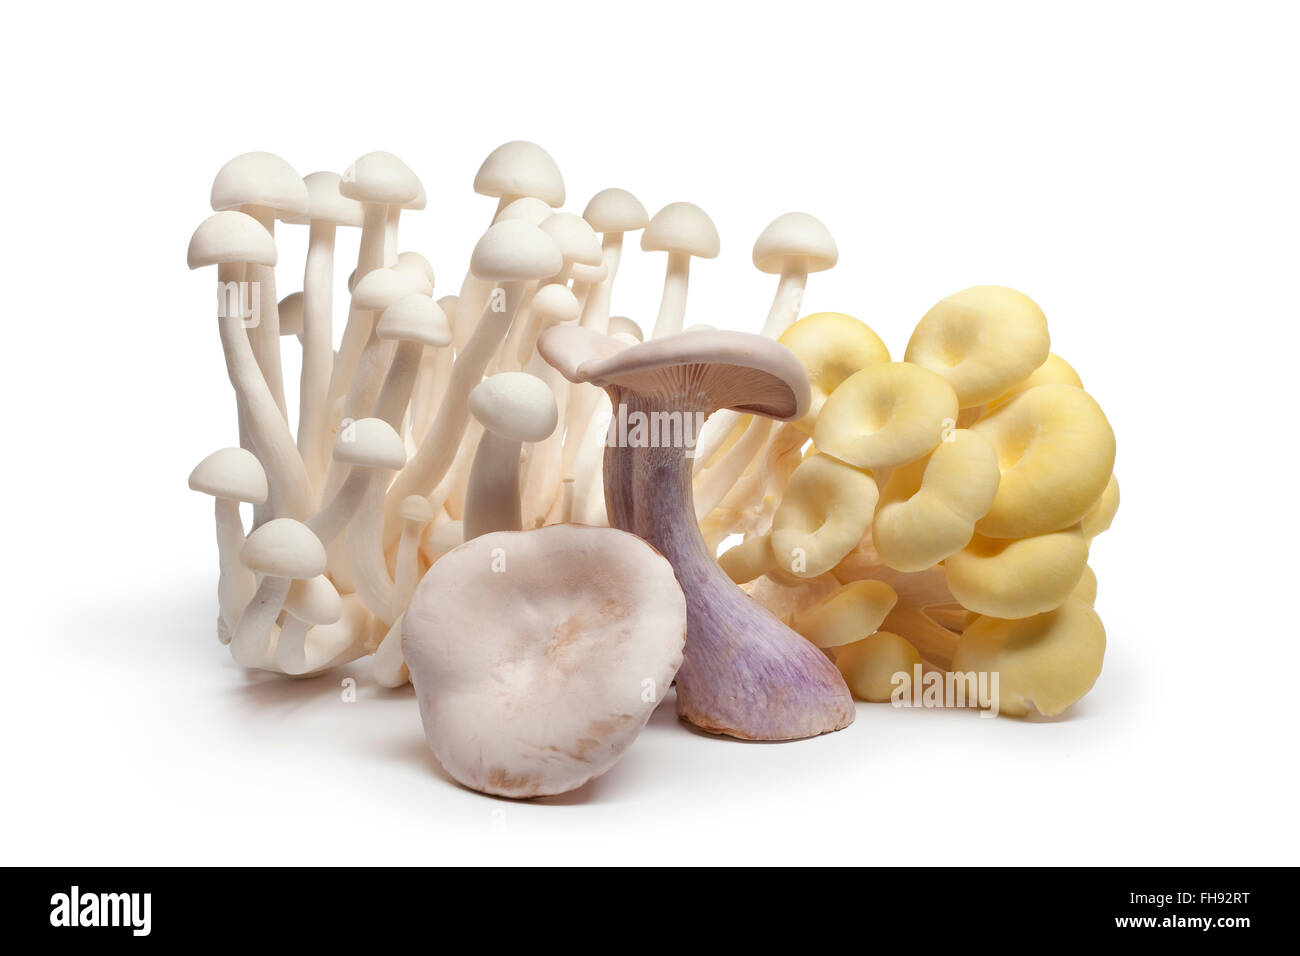 Variety of fresh raw edible mushrooms on white background Stock Photo